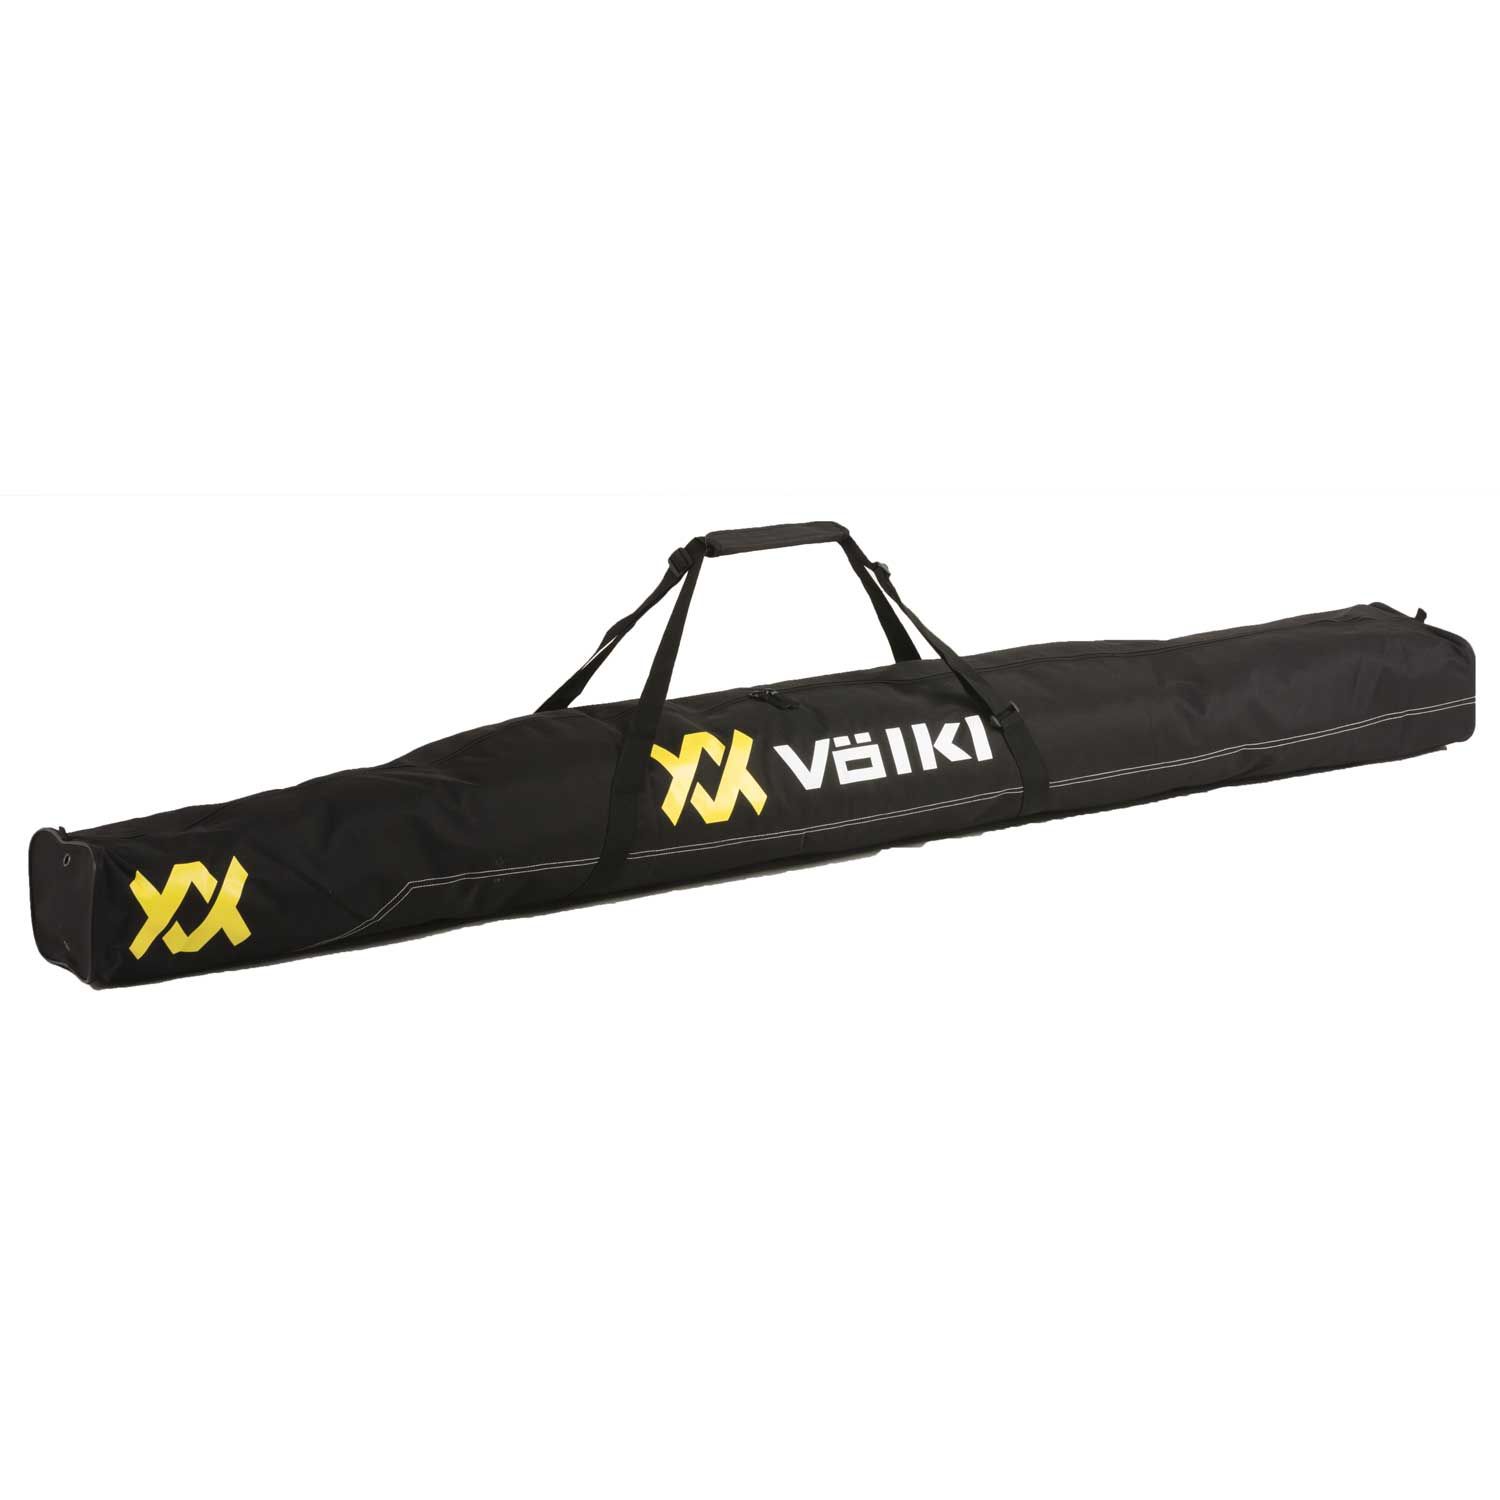 Volkl Double Ski Bag 195 cm - Noir